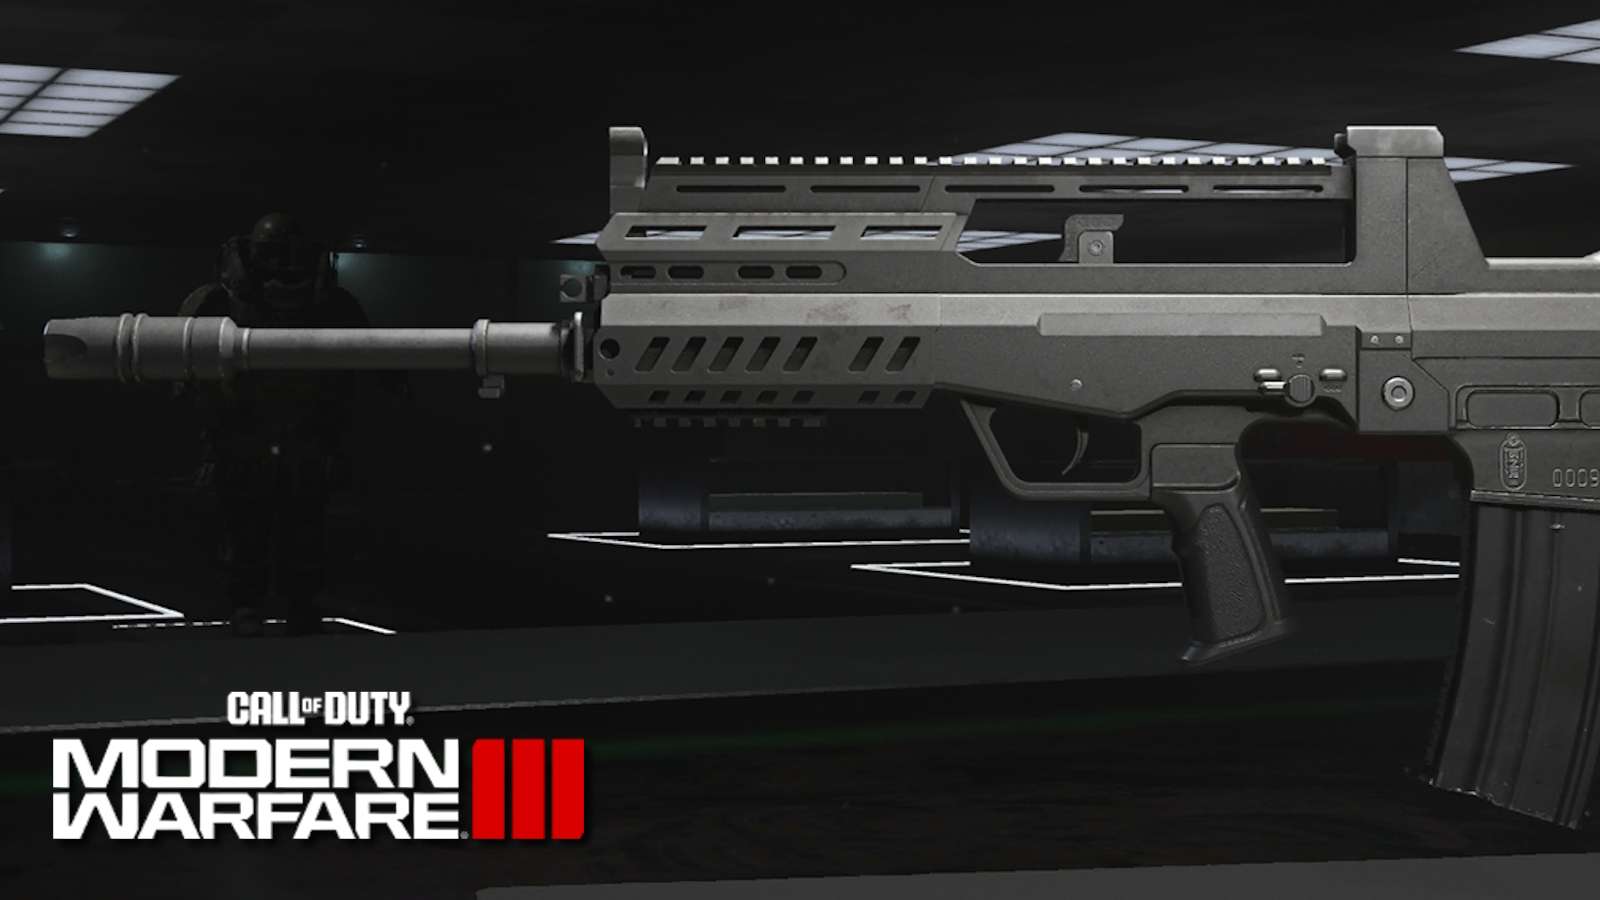 The DG-56 assault rifle in Modern Warfare 3.